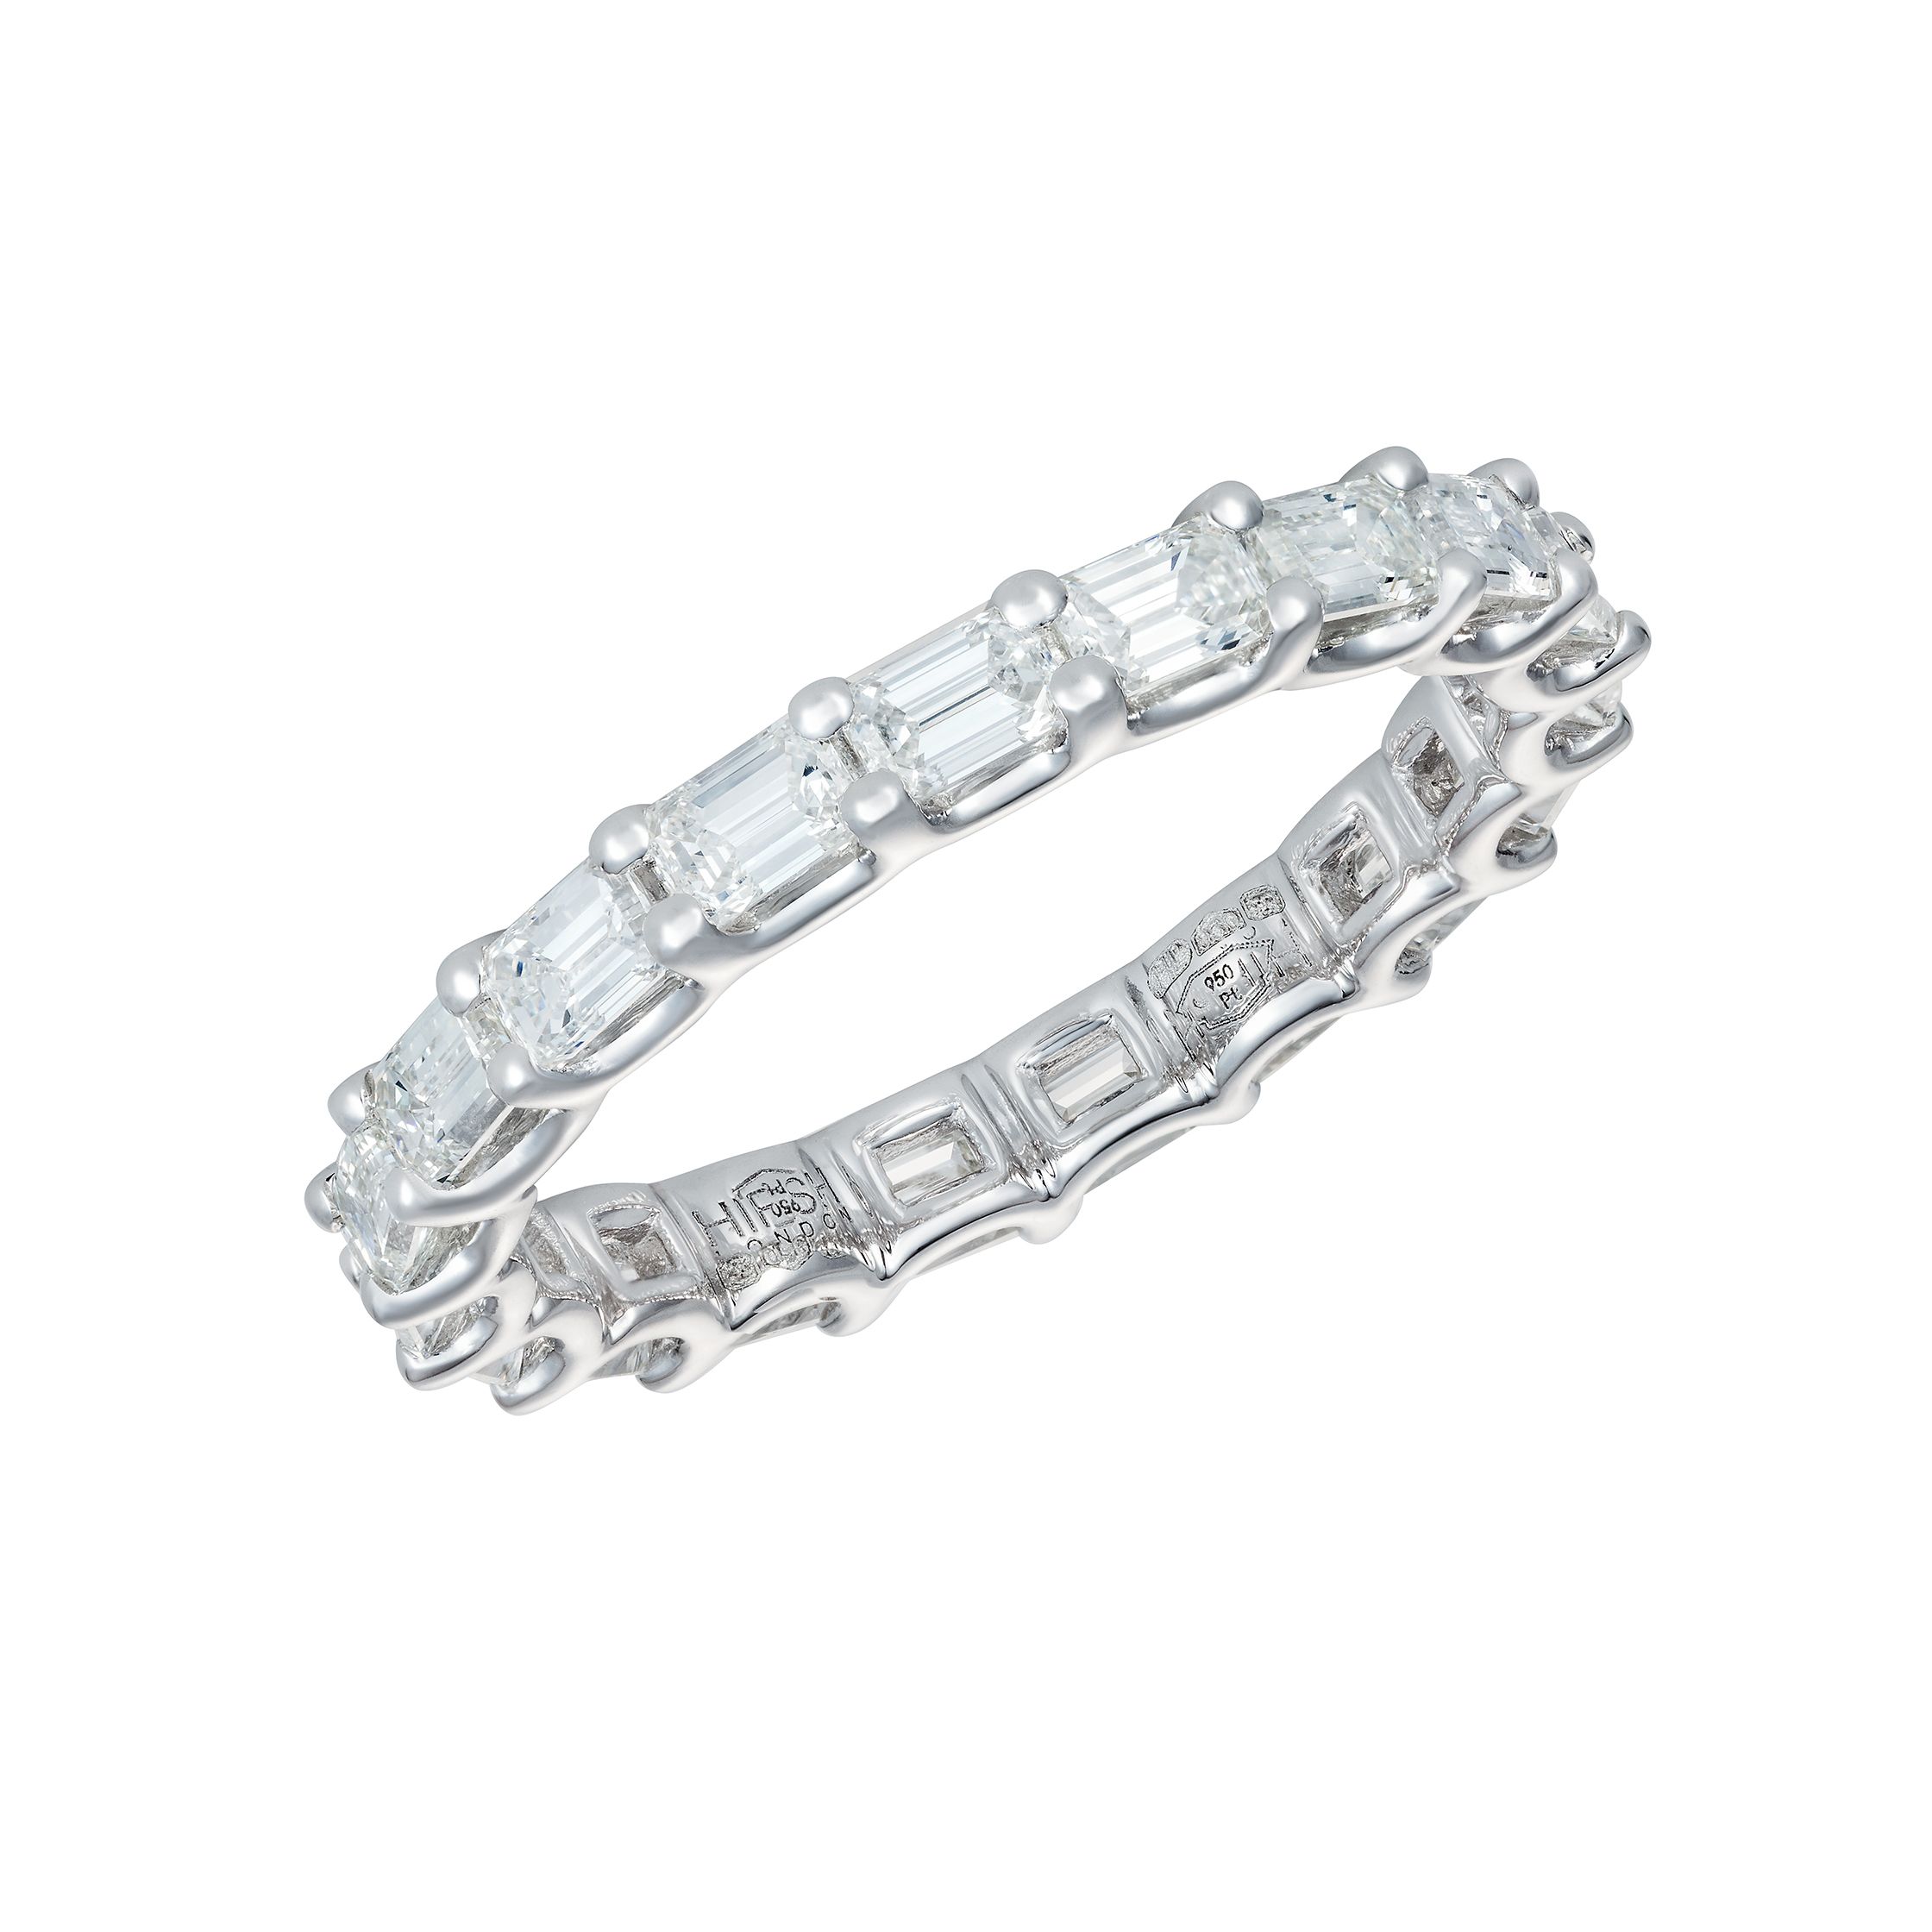 Share more than 72 diamond emerald cut eternity ring latest - vova.edu.vn